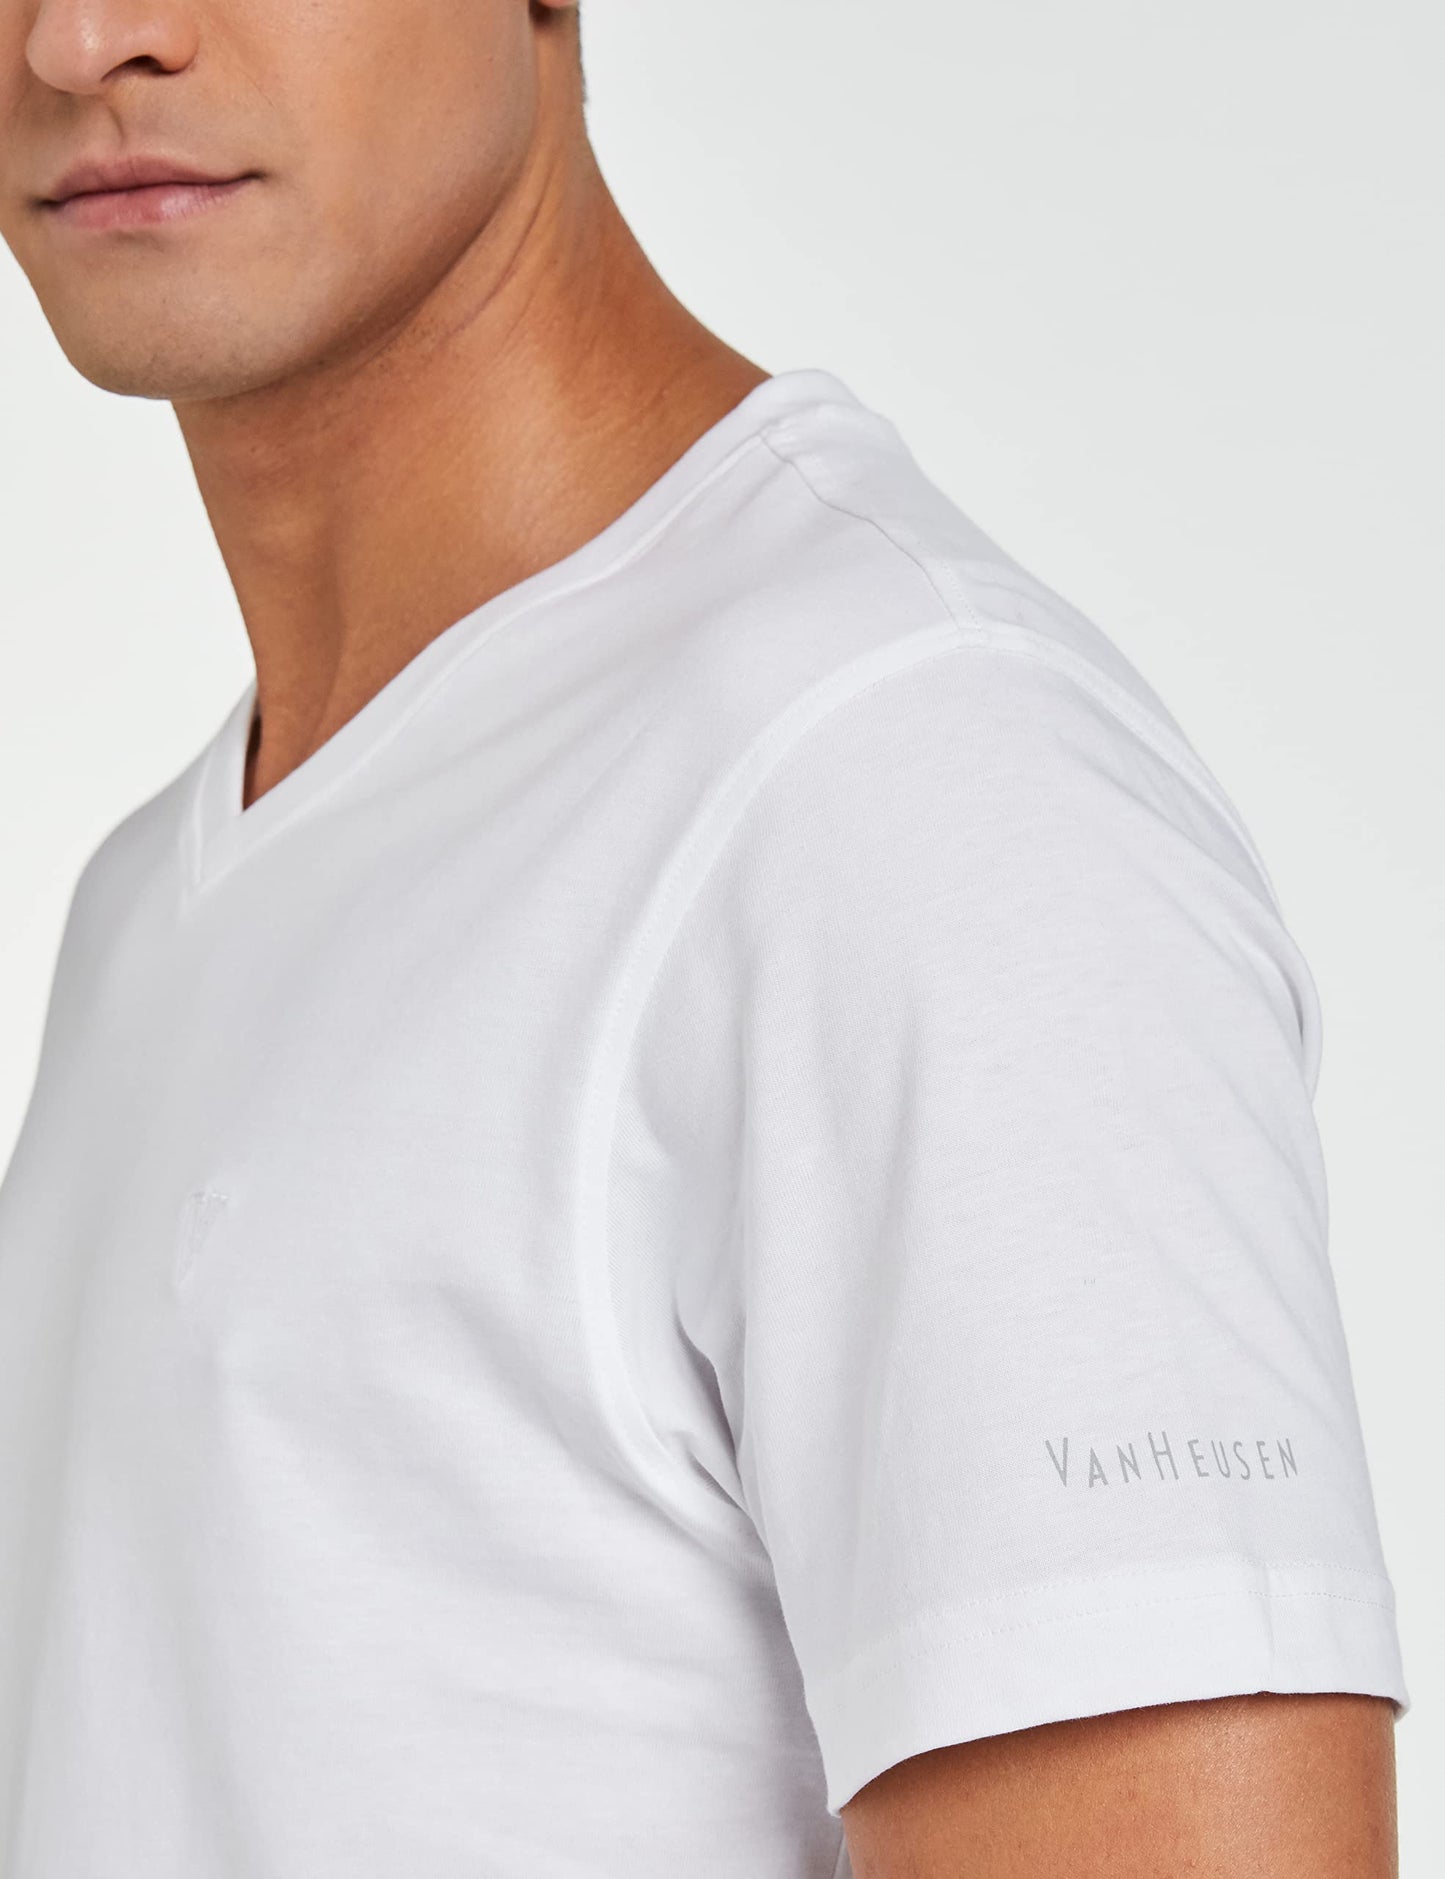 Van Heusen Men Athleisure V-Neck T-Shirt - 100% Combed Cotton - Short Sleeve, Ultra Soft_60035_White_L